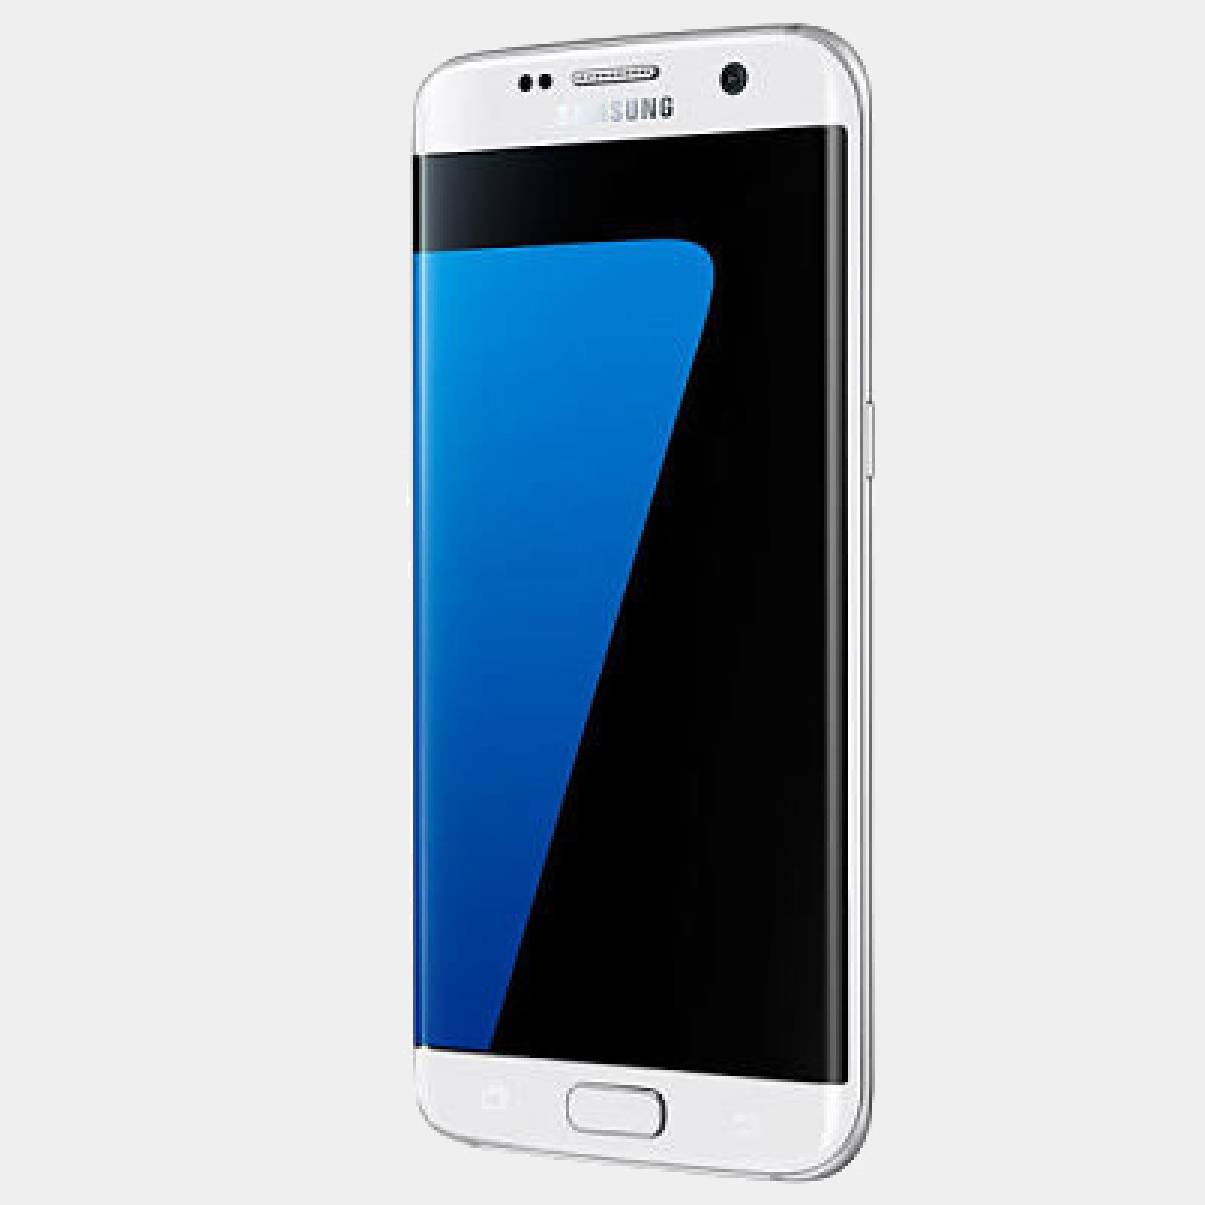 Teléfono Samsung S7 Edge blanco 32GB europeo